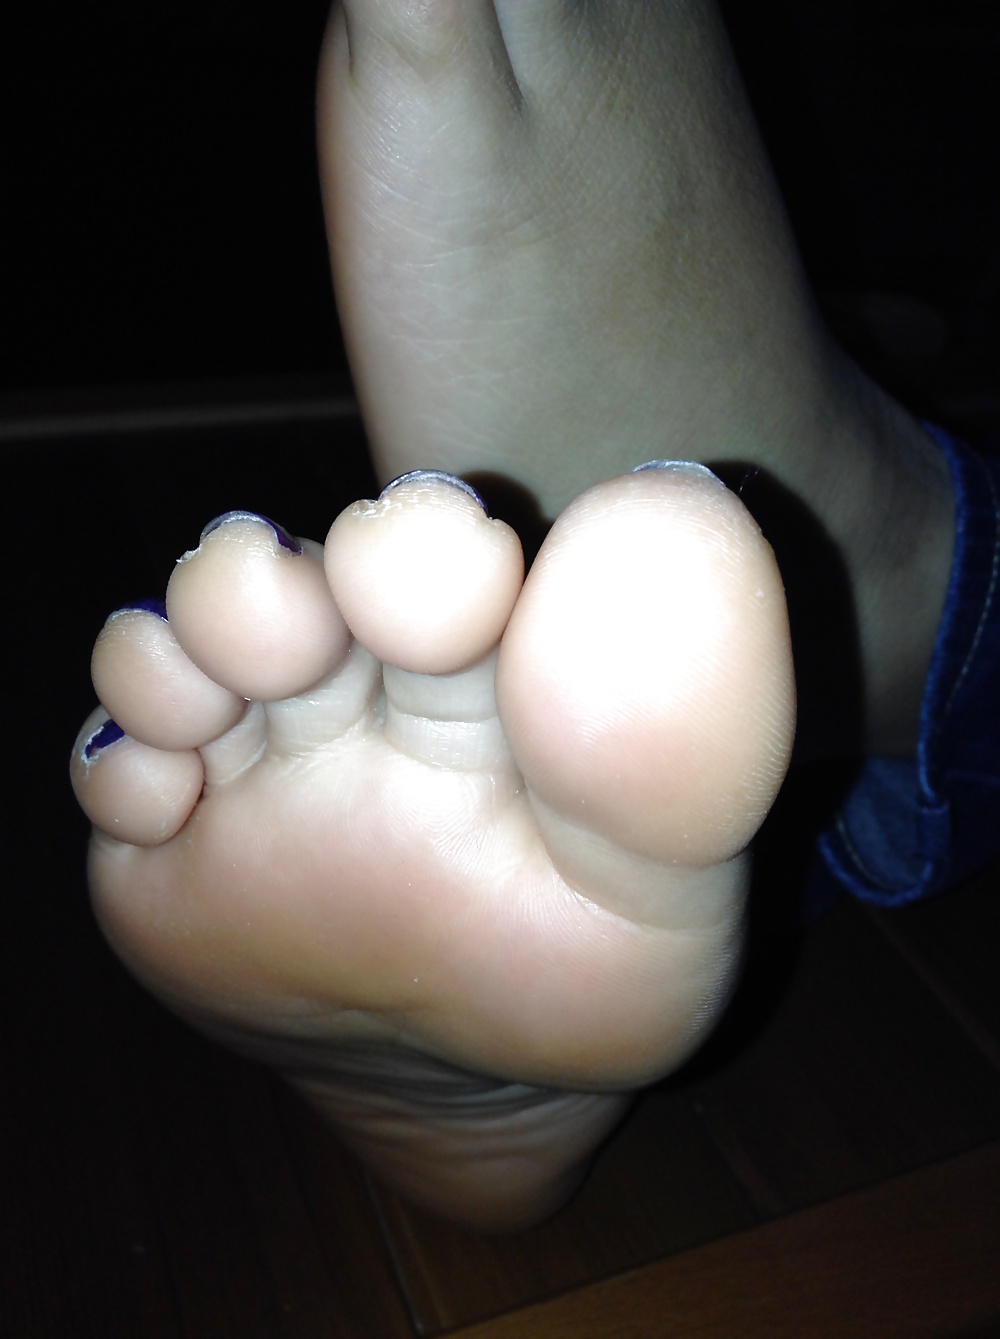 My latina girlfriend's feet. #40688257